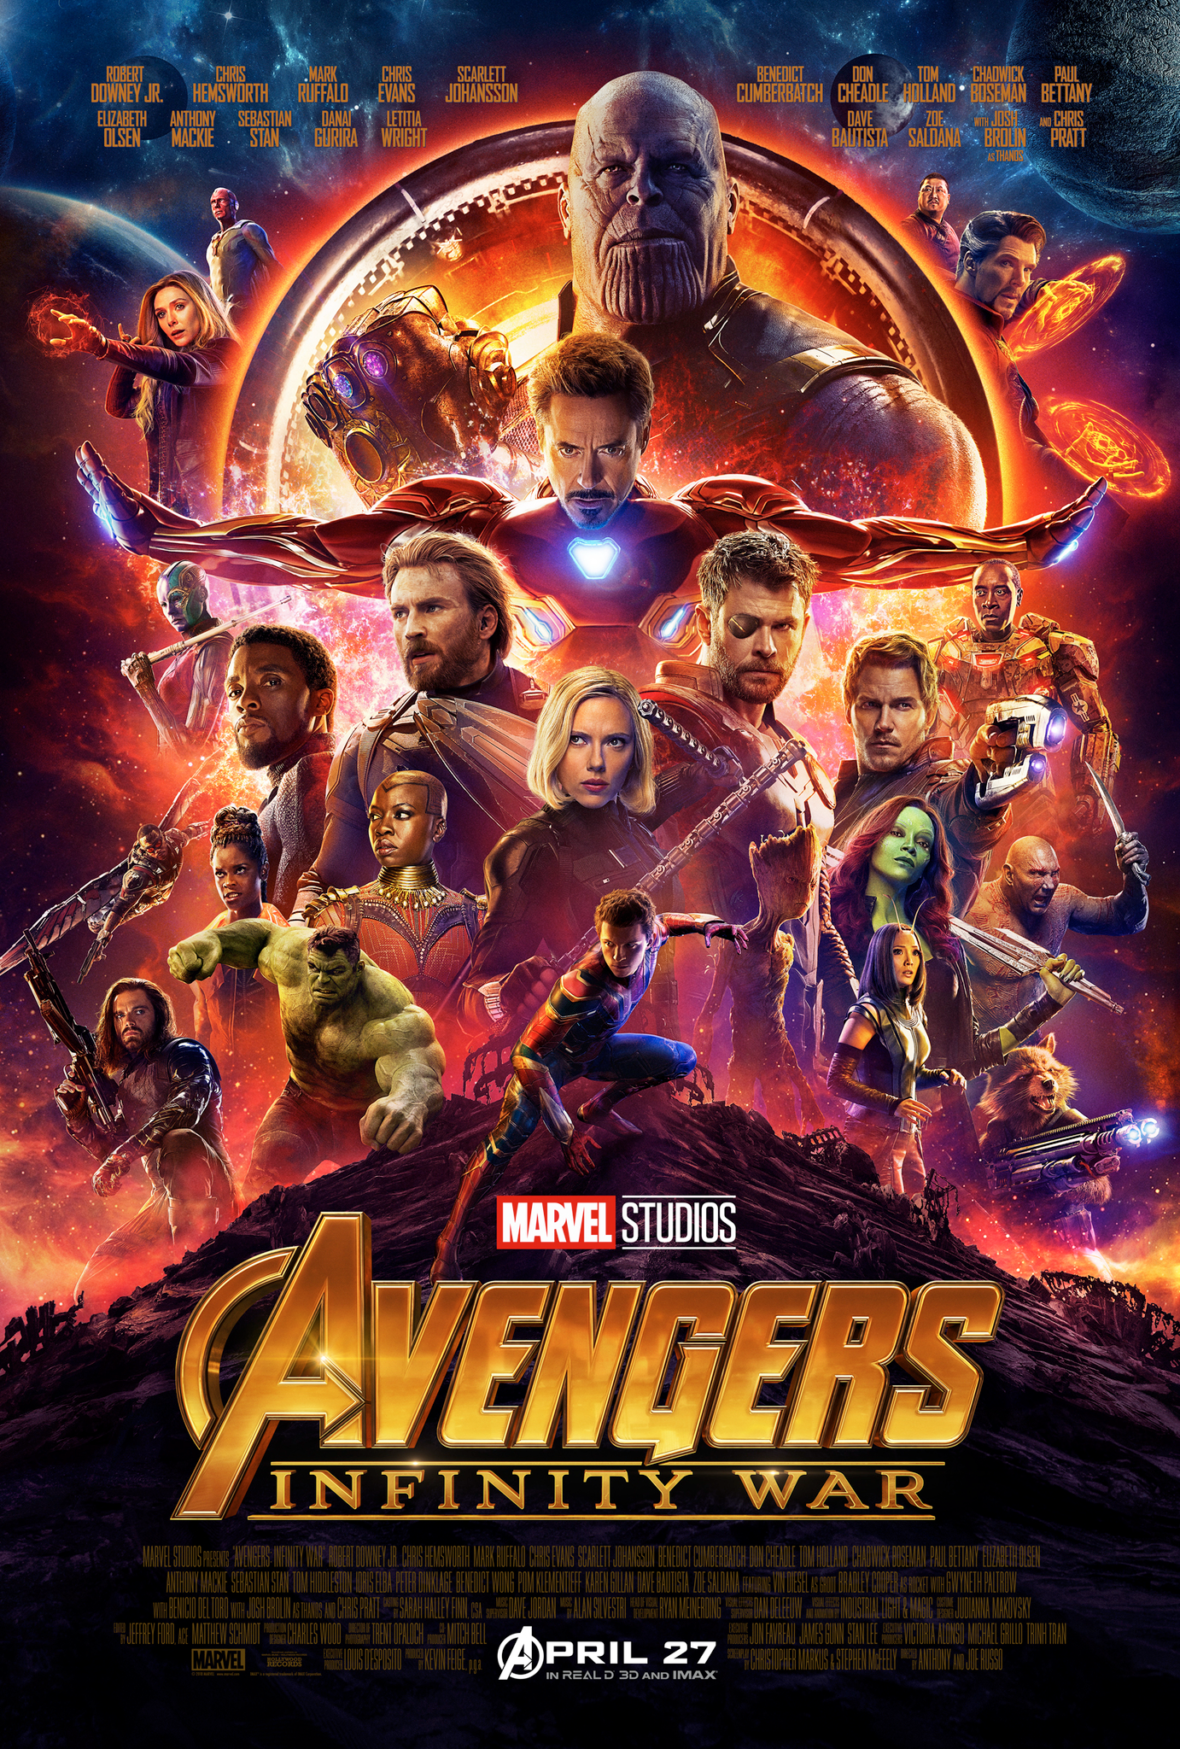 Best Josh Brolin Movies: Avengers Infinity War